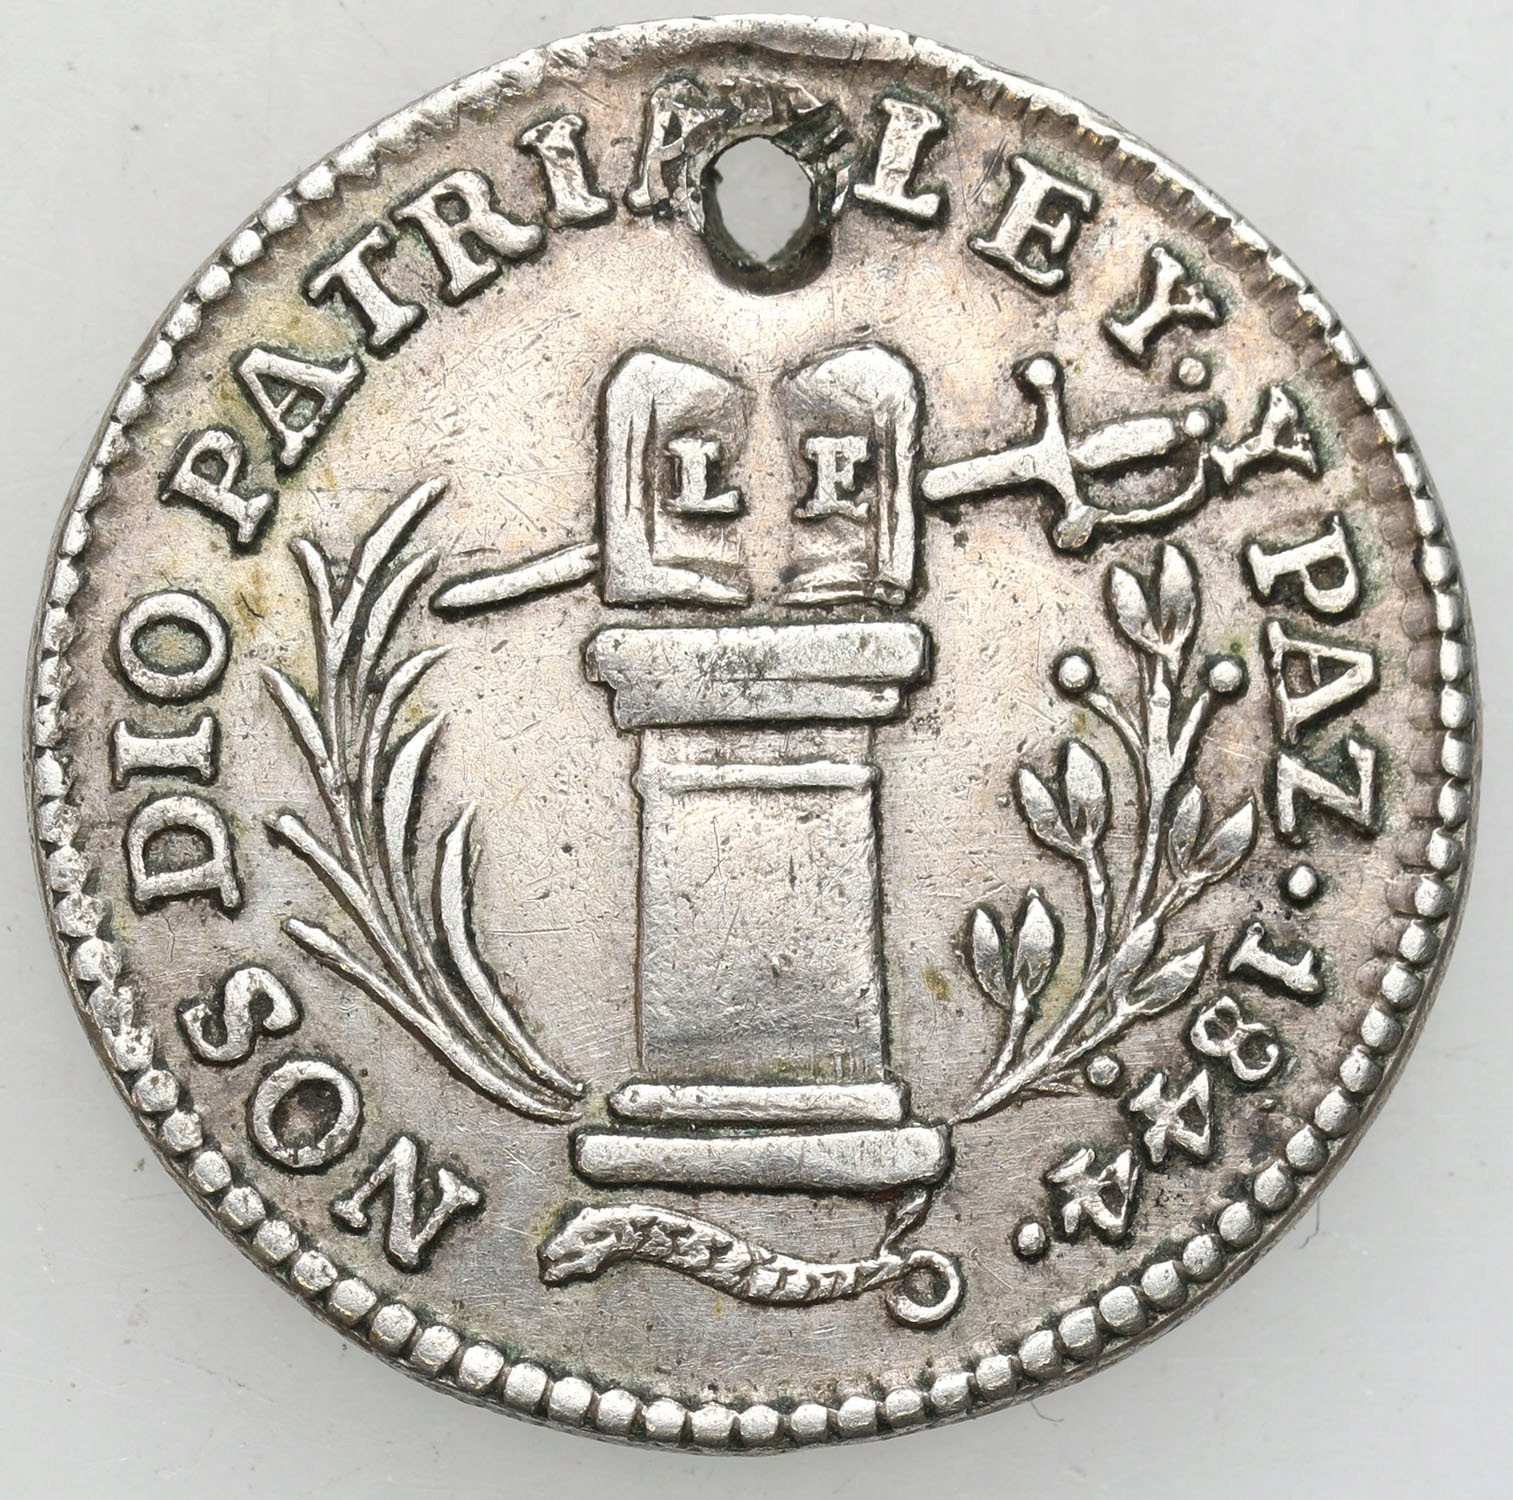 Boliwia. Medal Proklamacji Prezydenckiej 1844